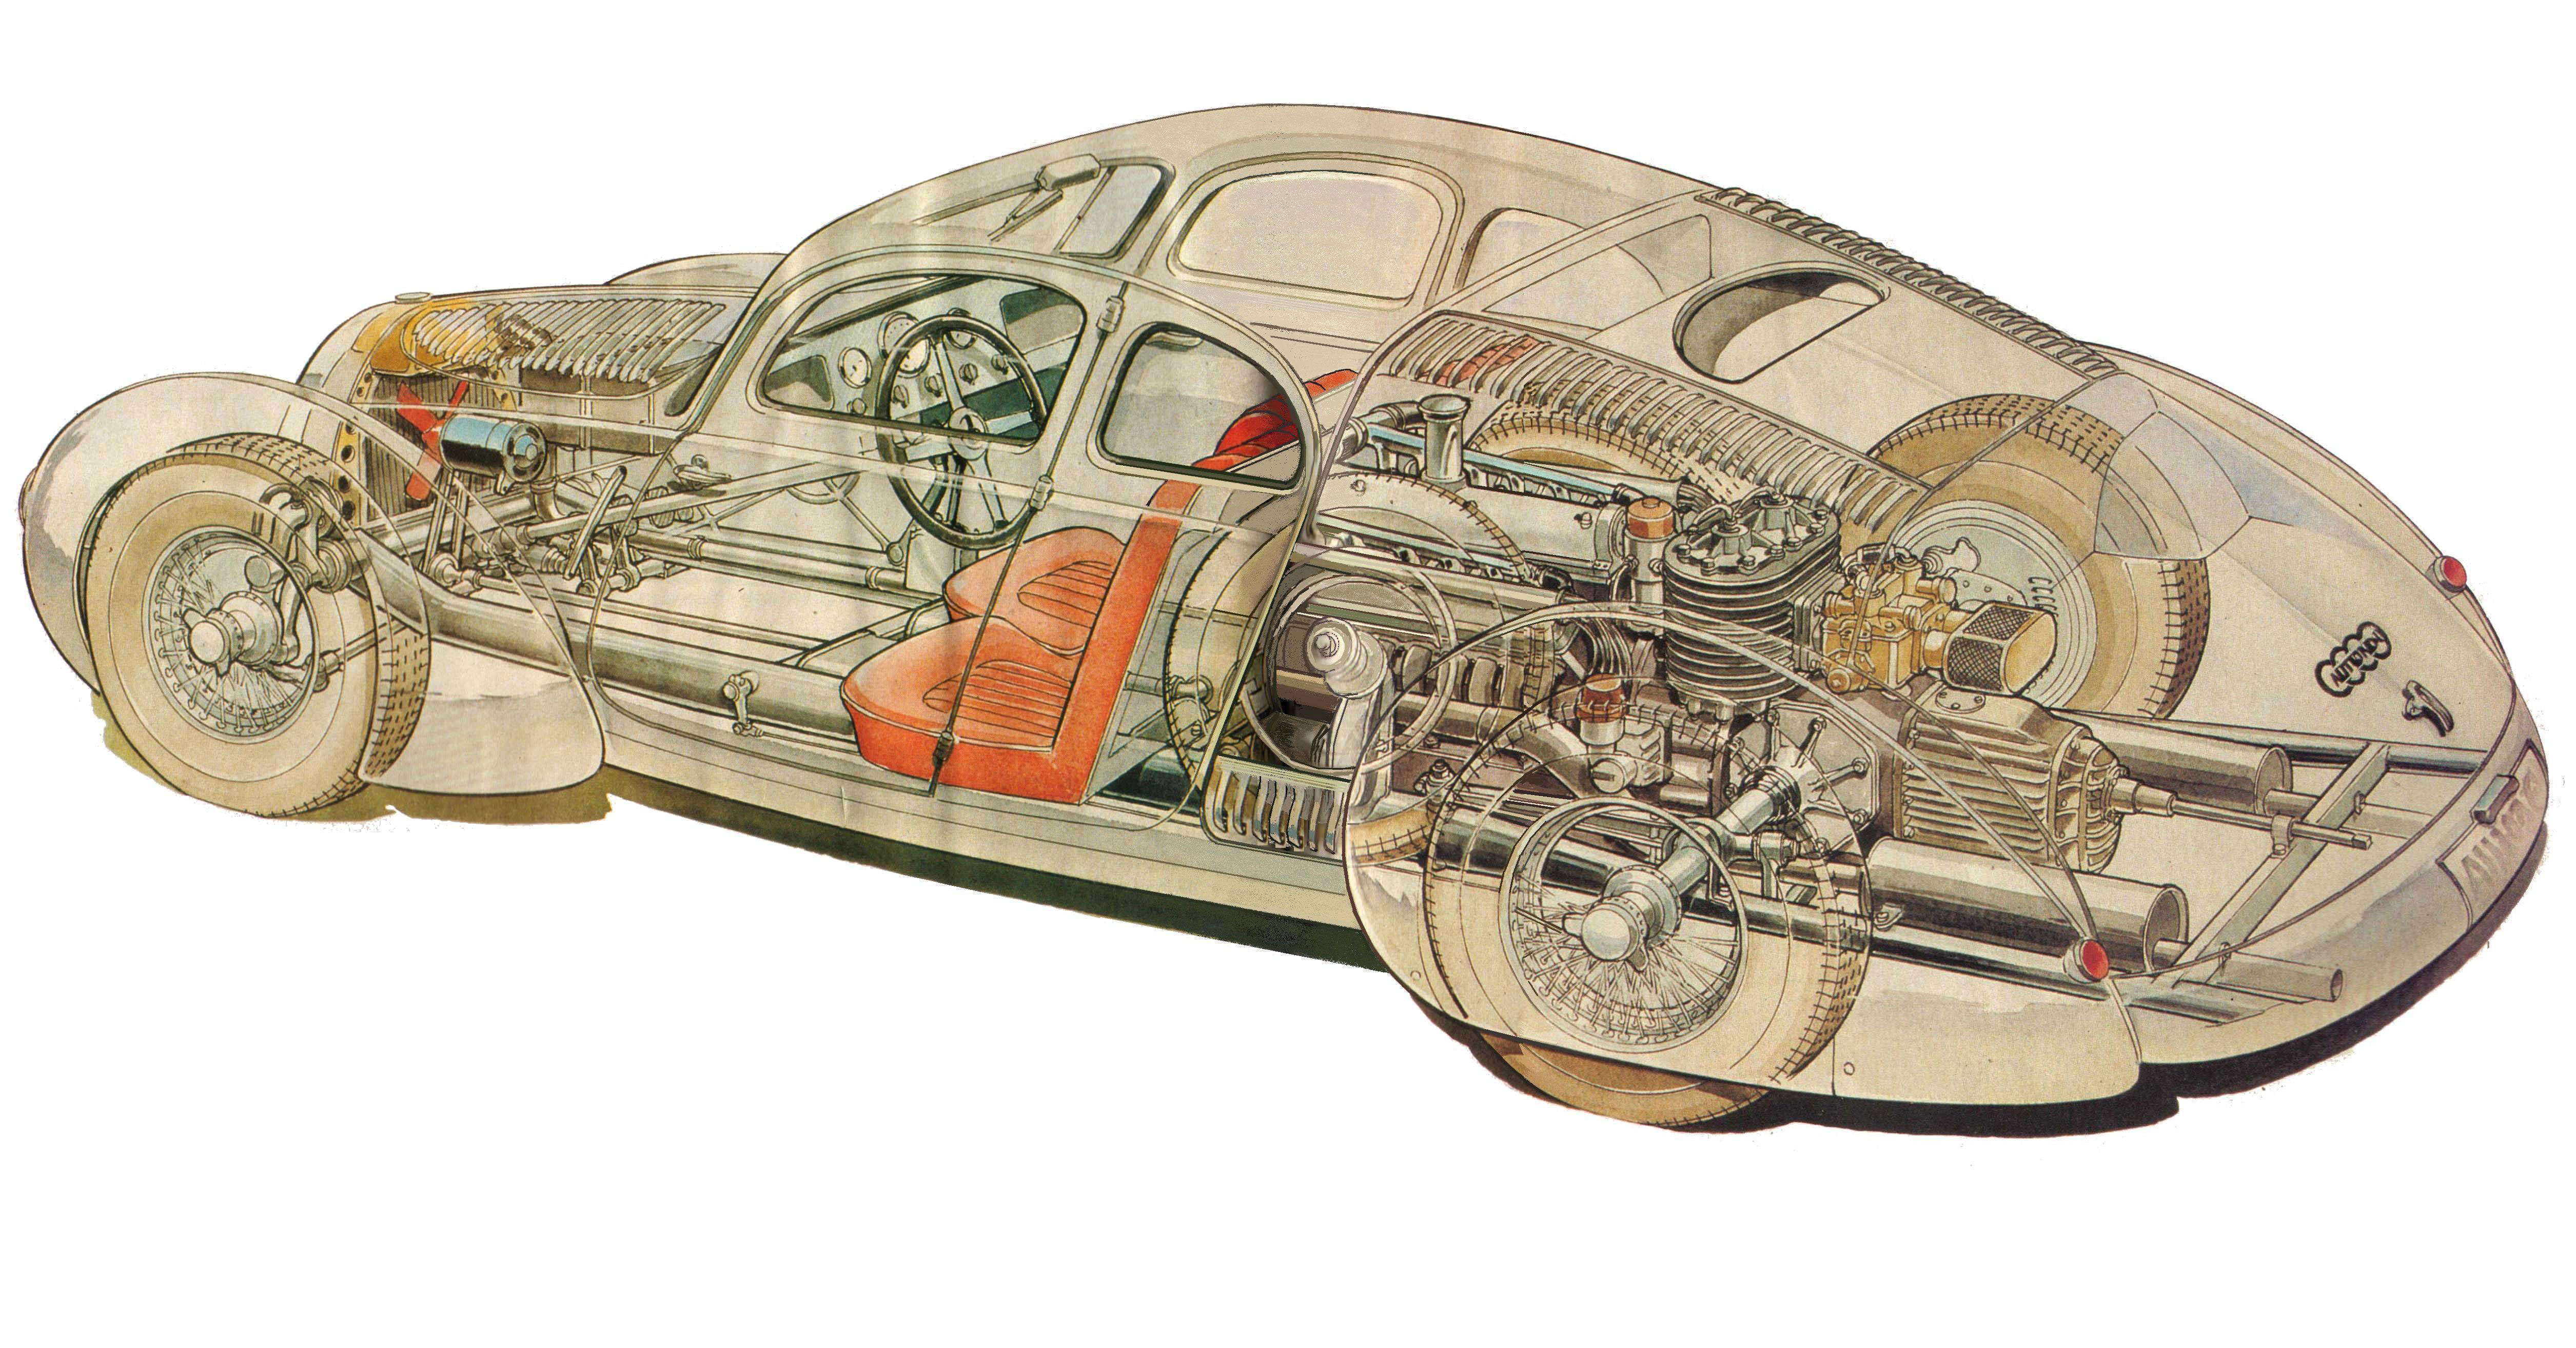 Auto Union P52 cutaway drawing